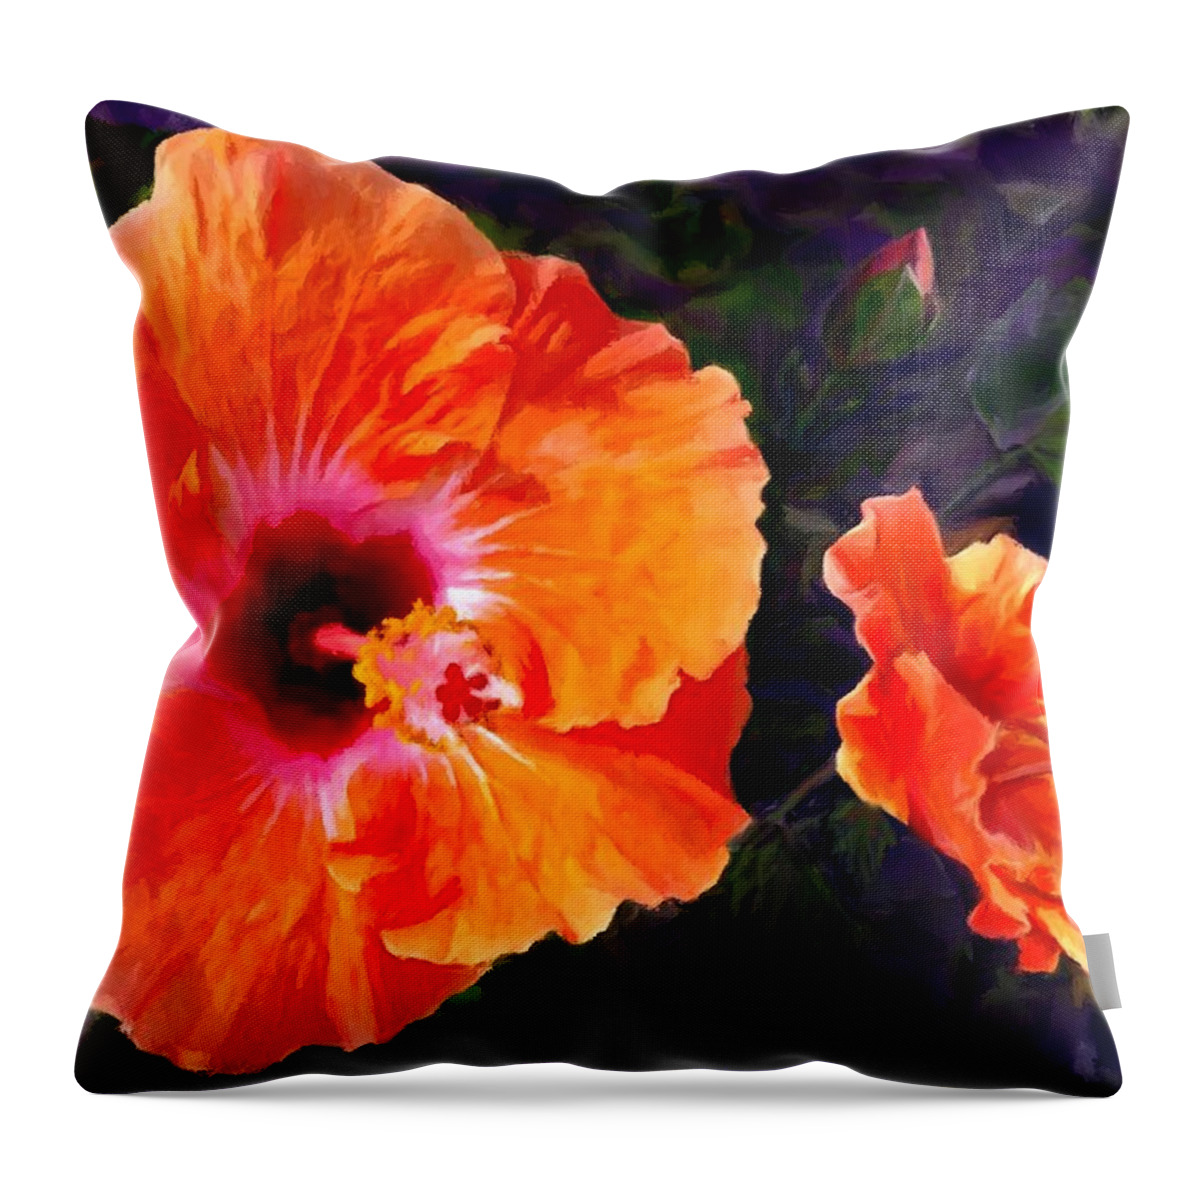 Hibiscus Throw Pillow featuring the painting Pinkish Orange Hibiscus by Stephen Jorgensen